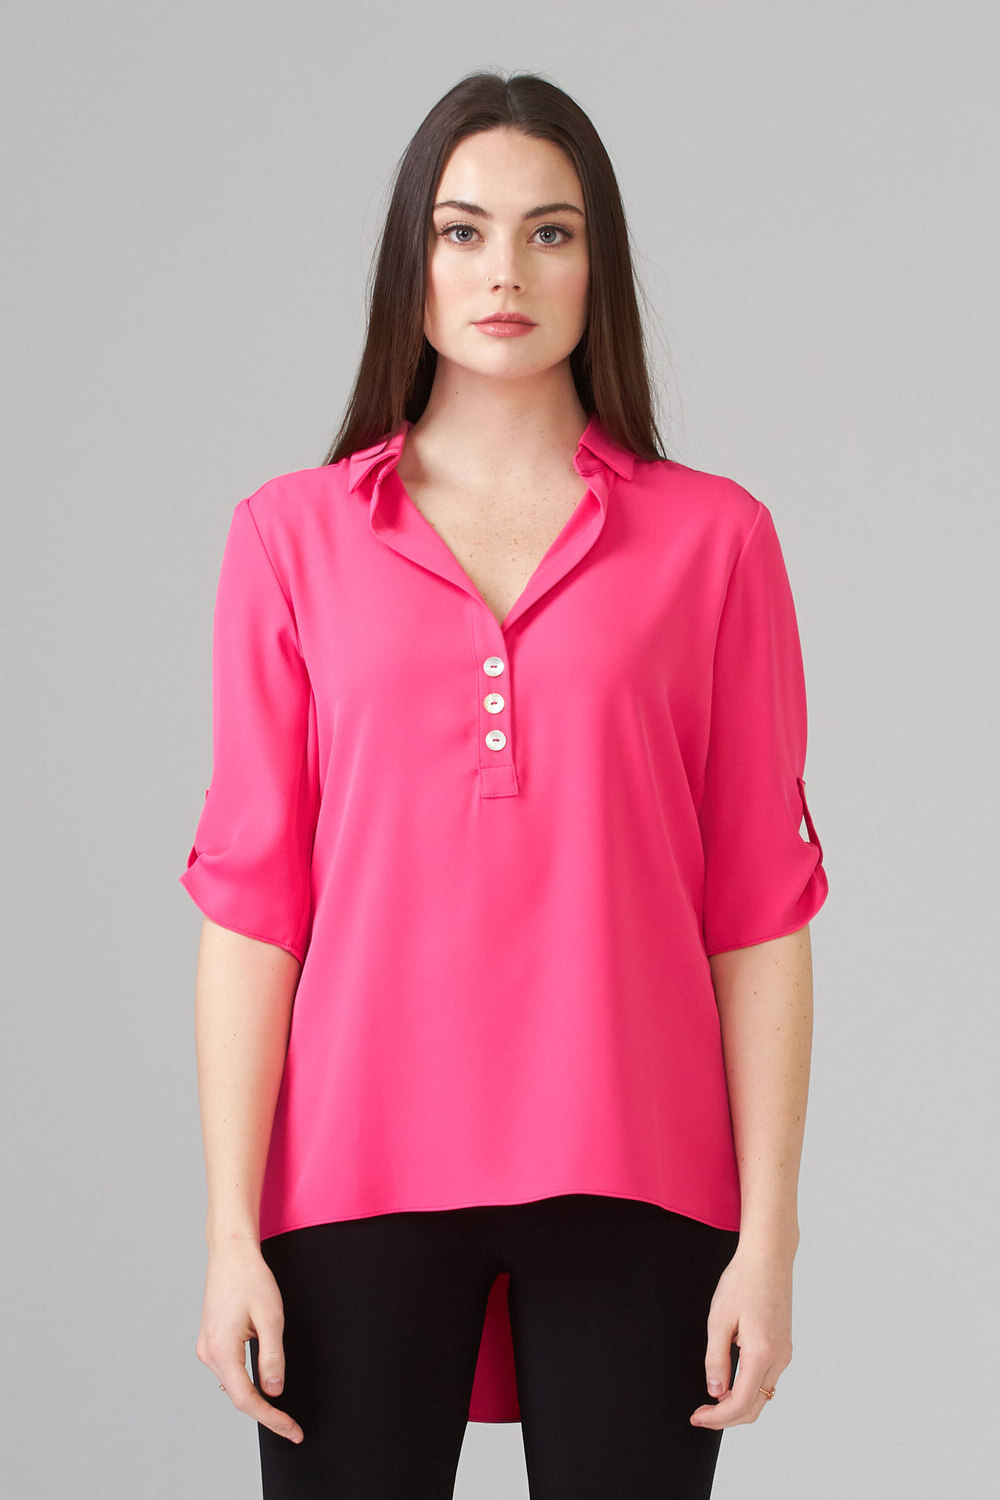 Joseph Ribkoff blouse style 201412. Rose Vif